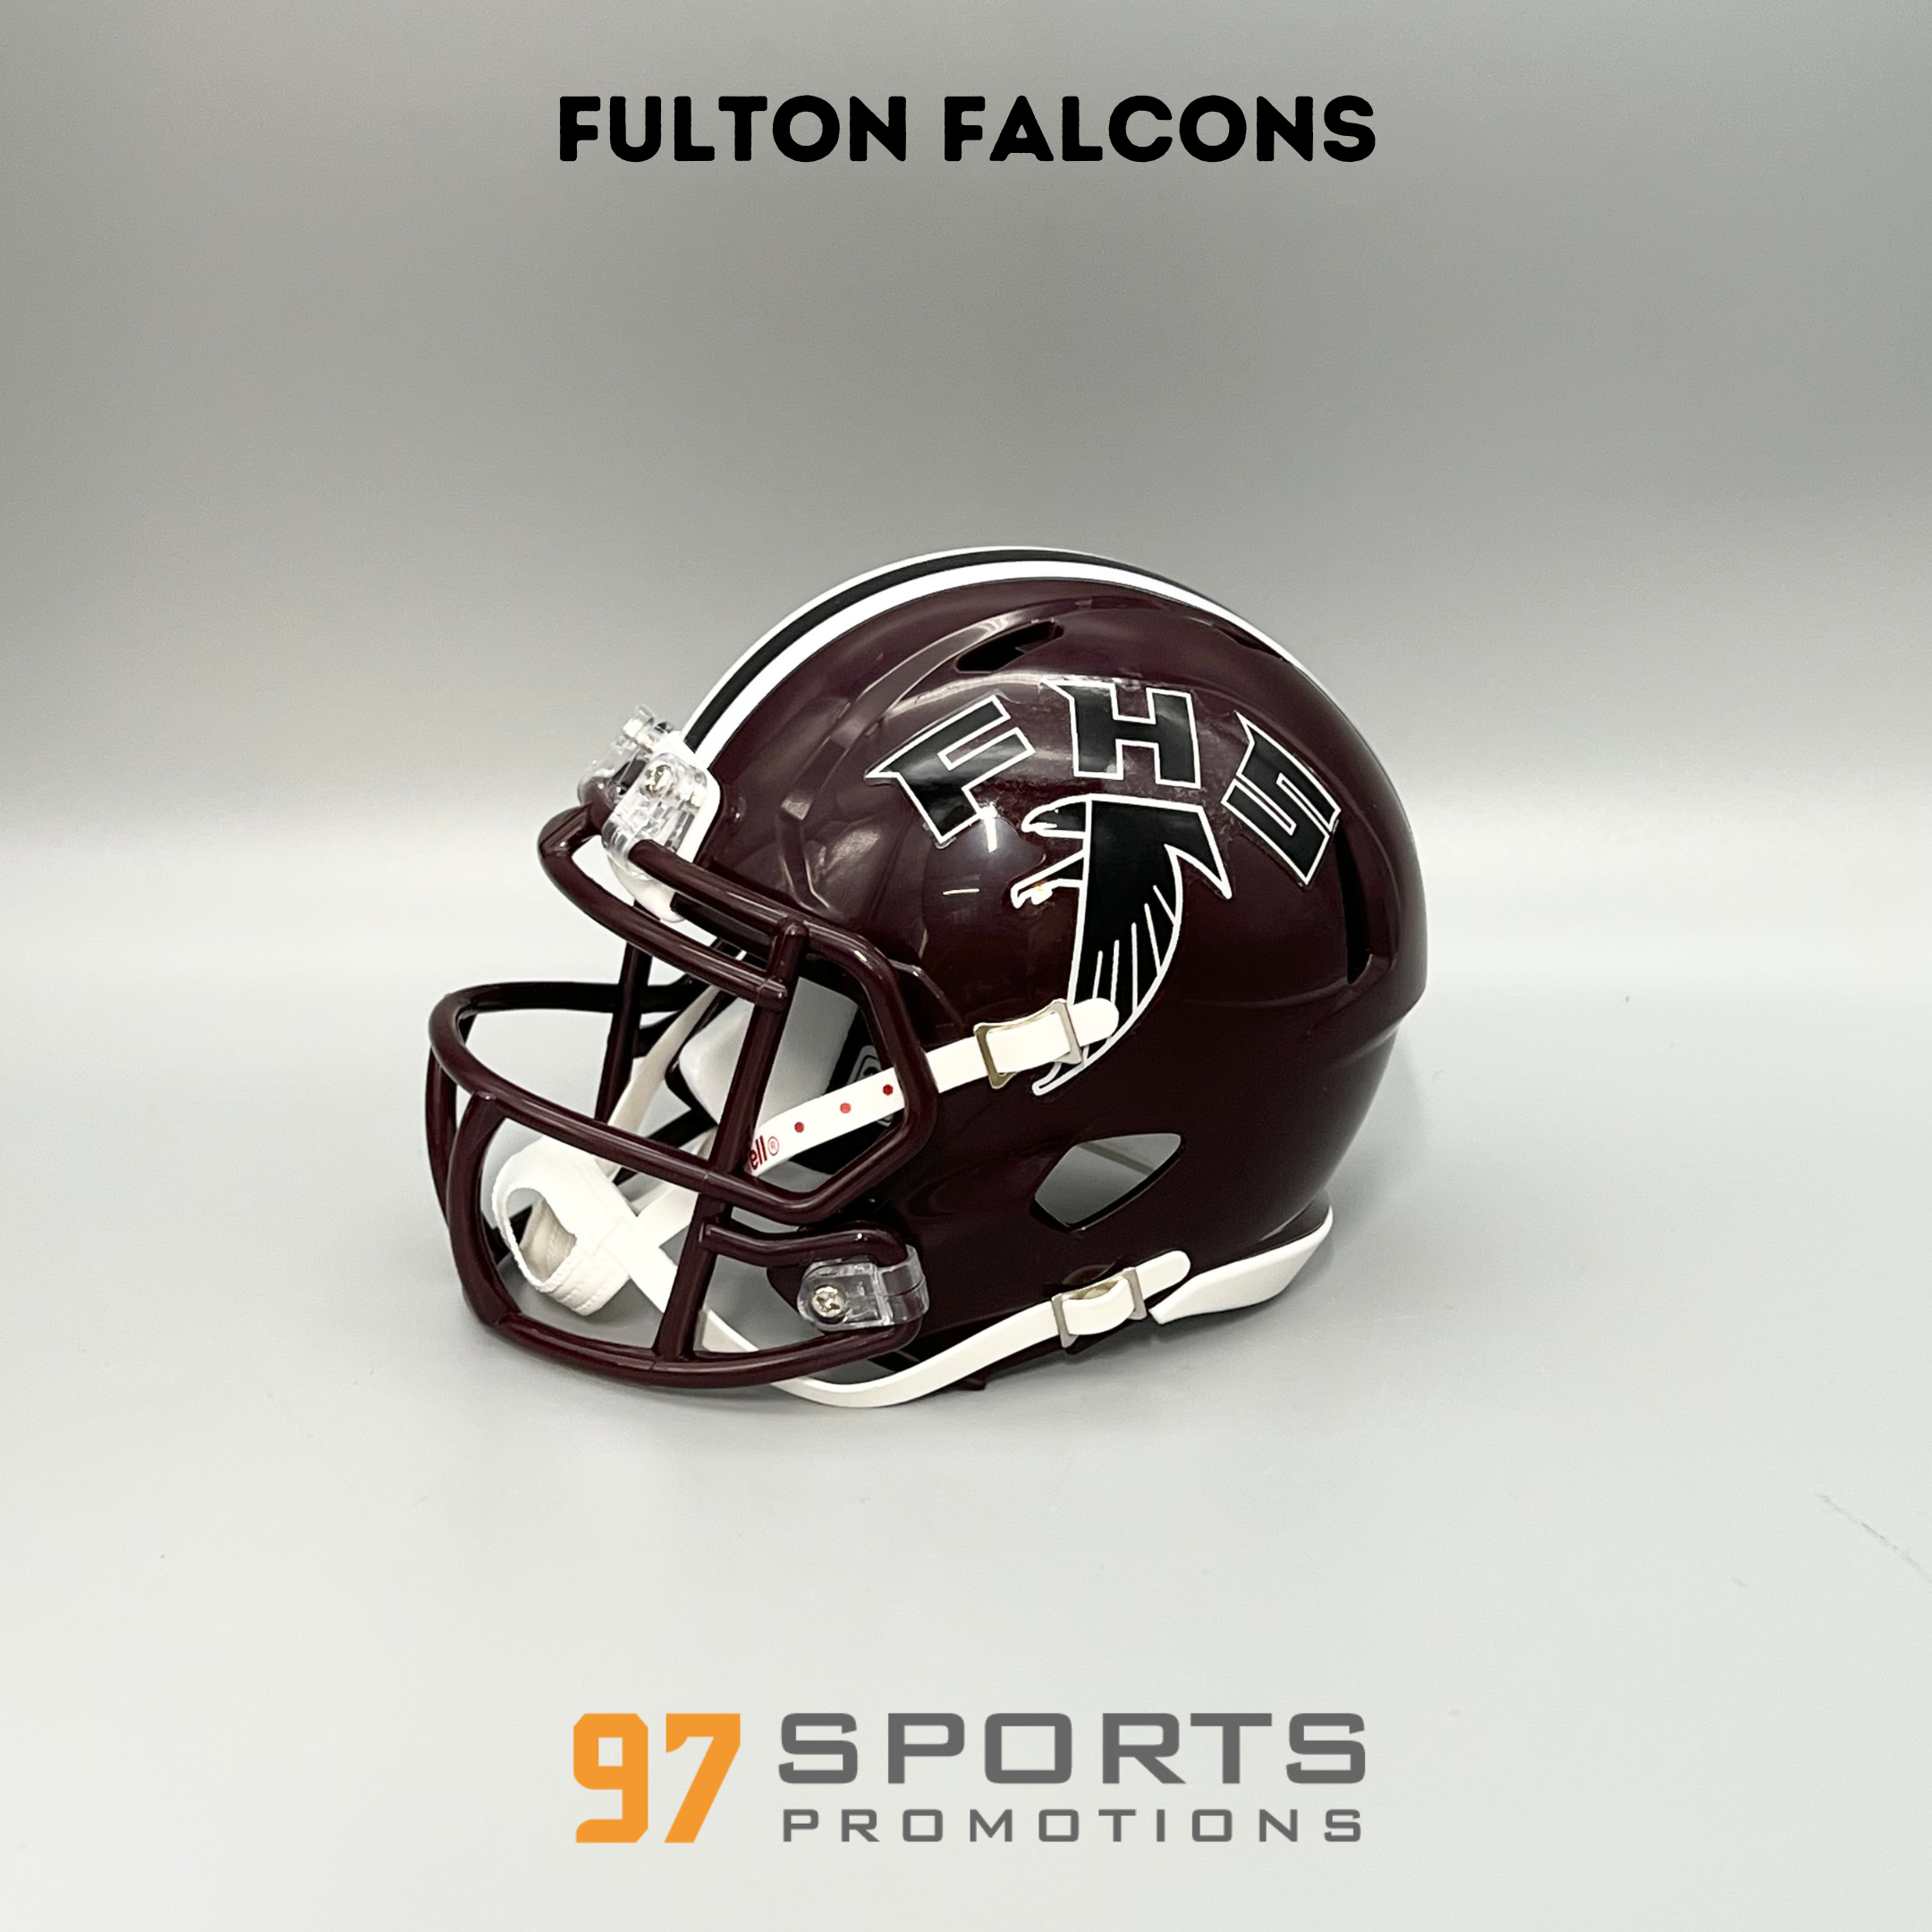  Fulton Falcons